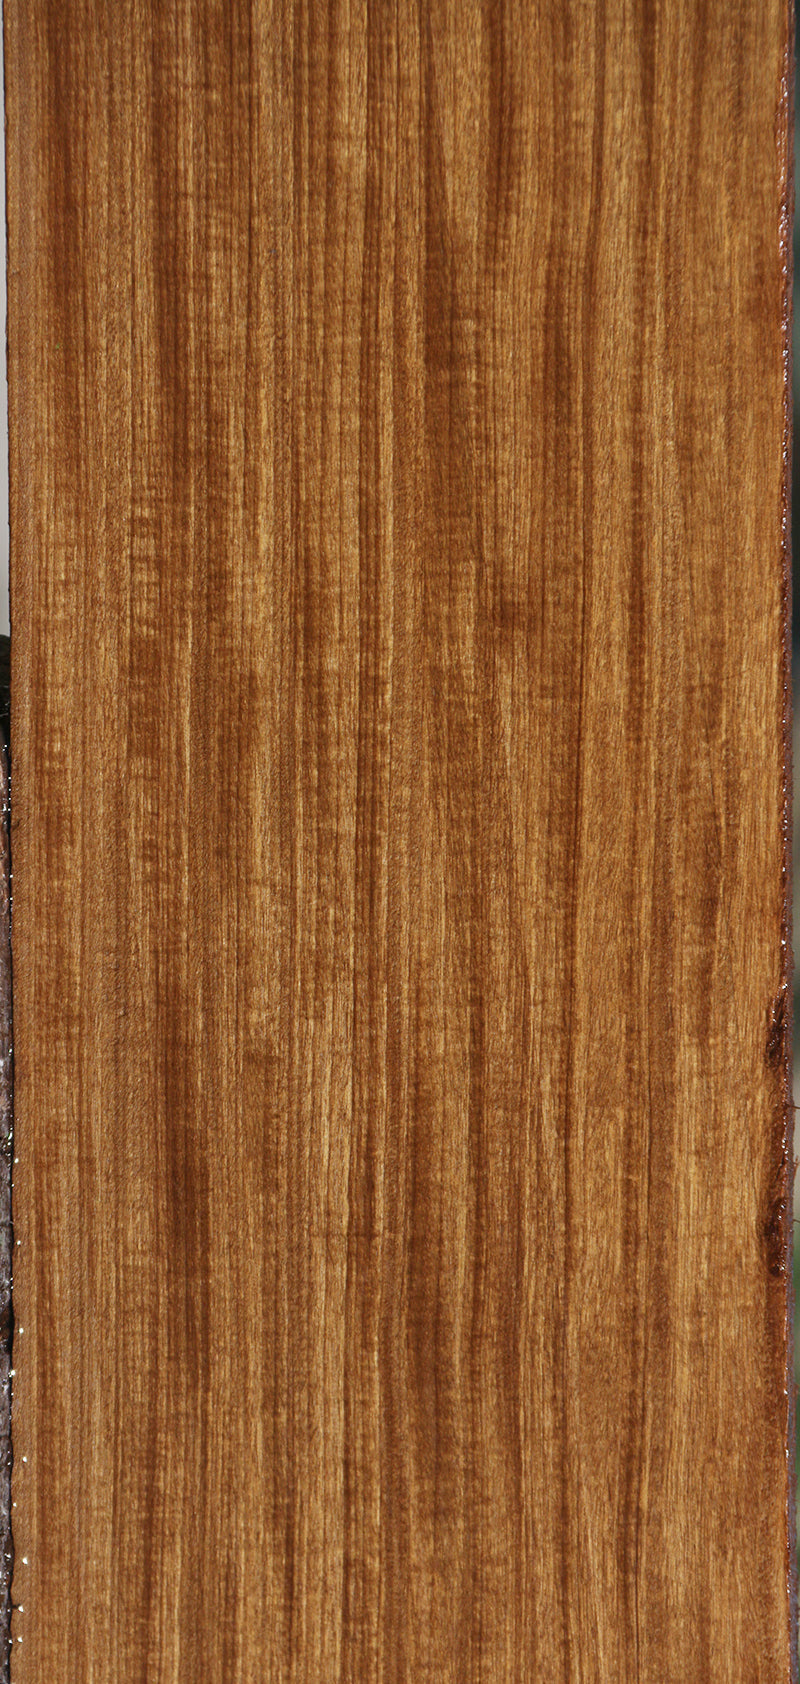 Afrormosia Lumber